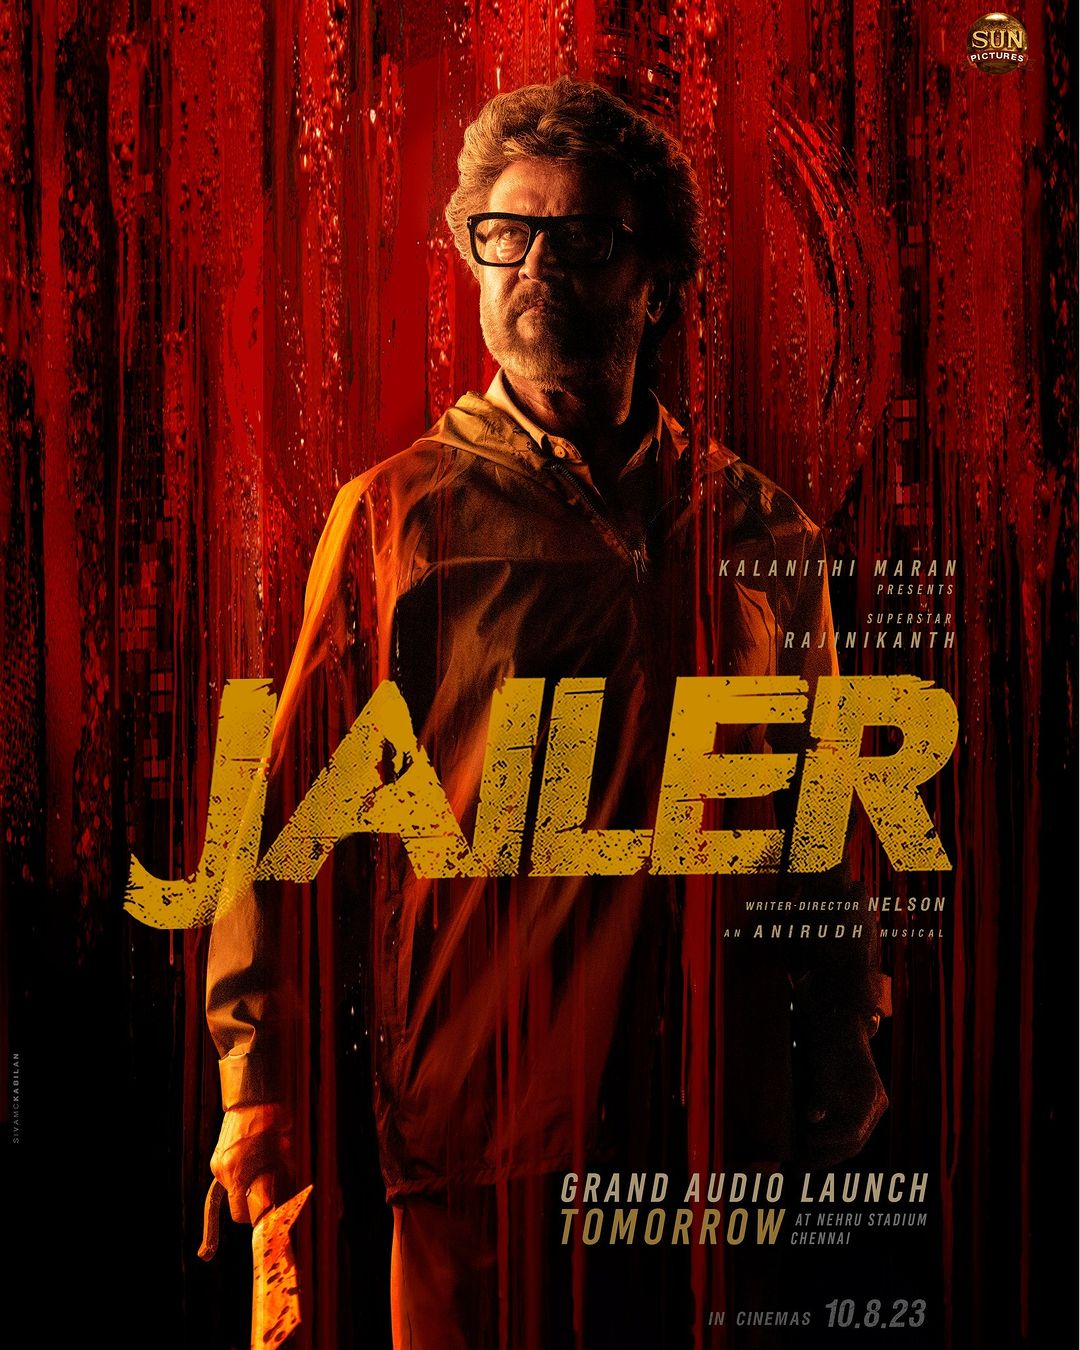 Jailer Movie Poster